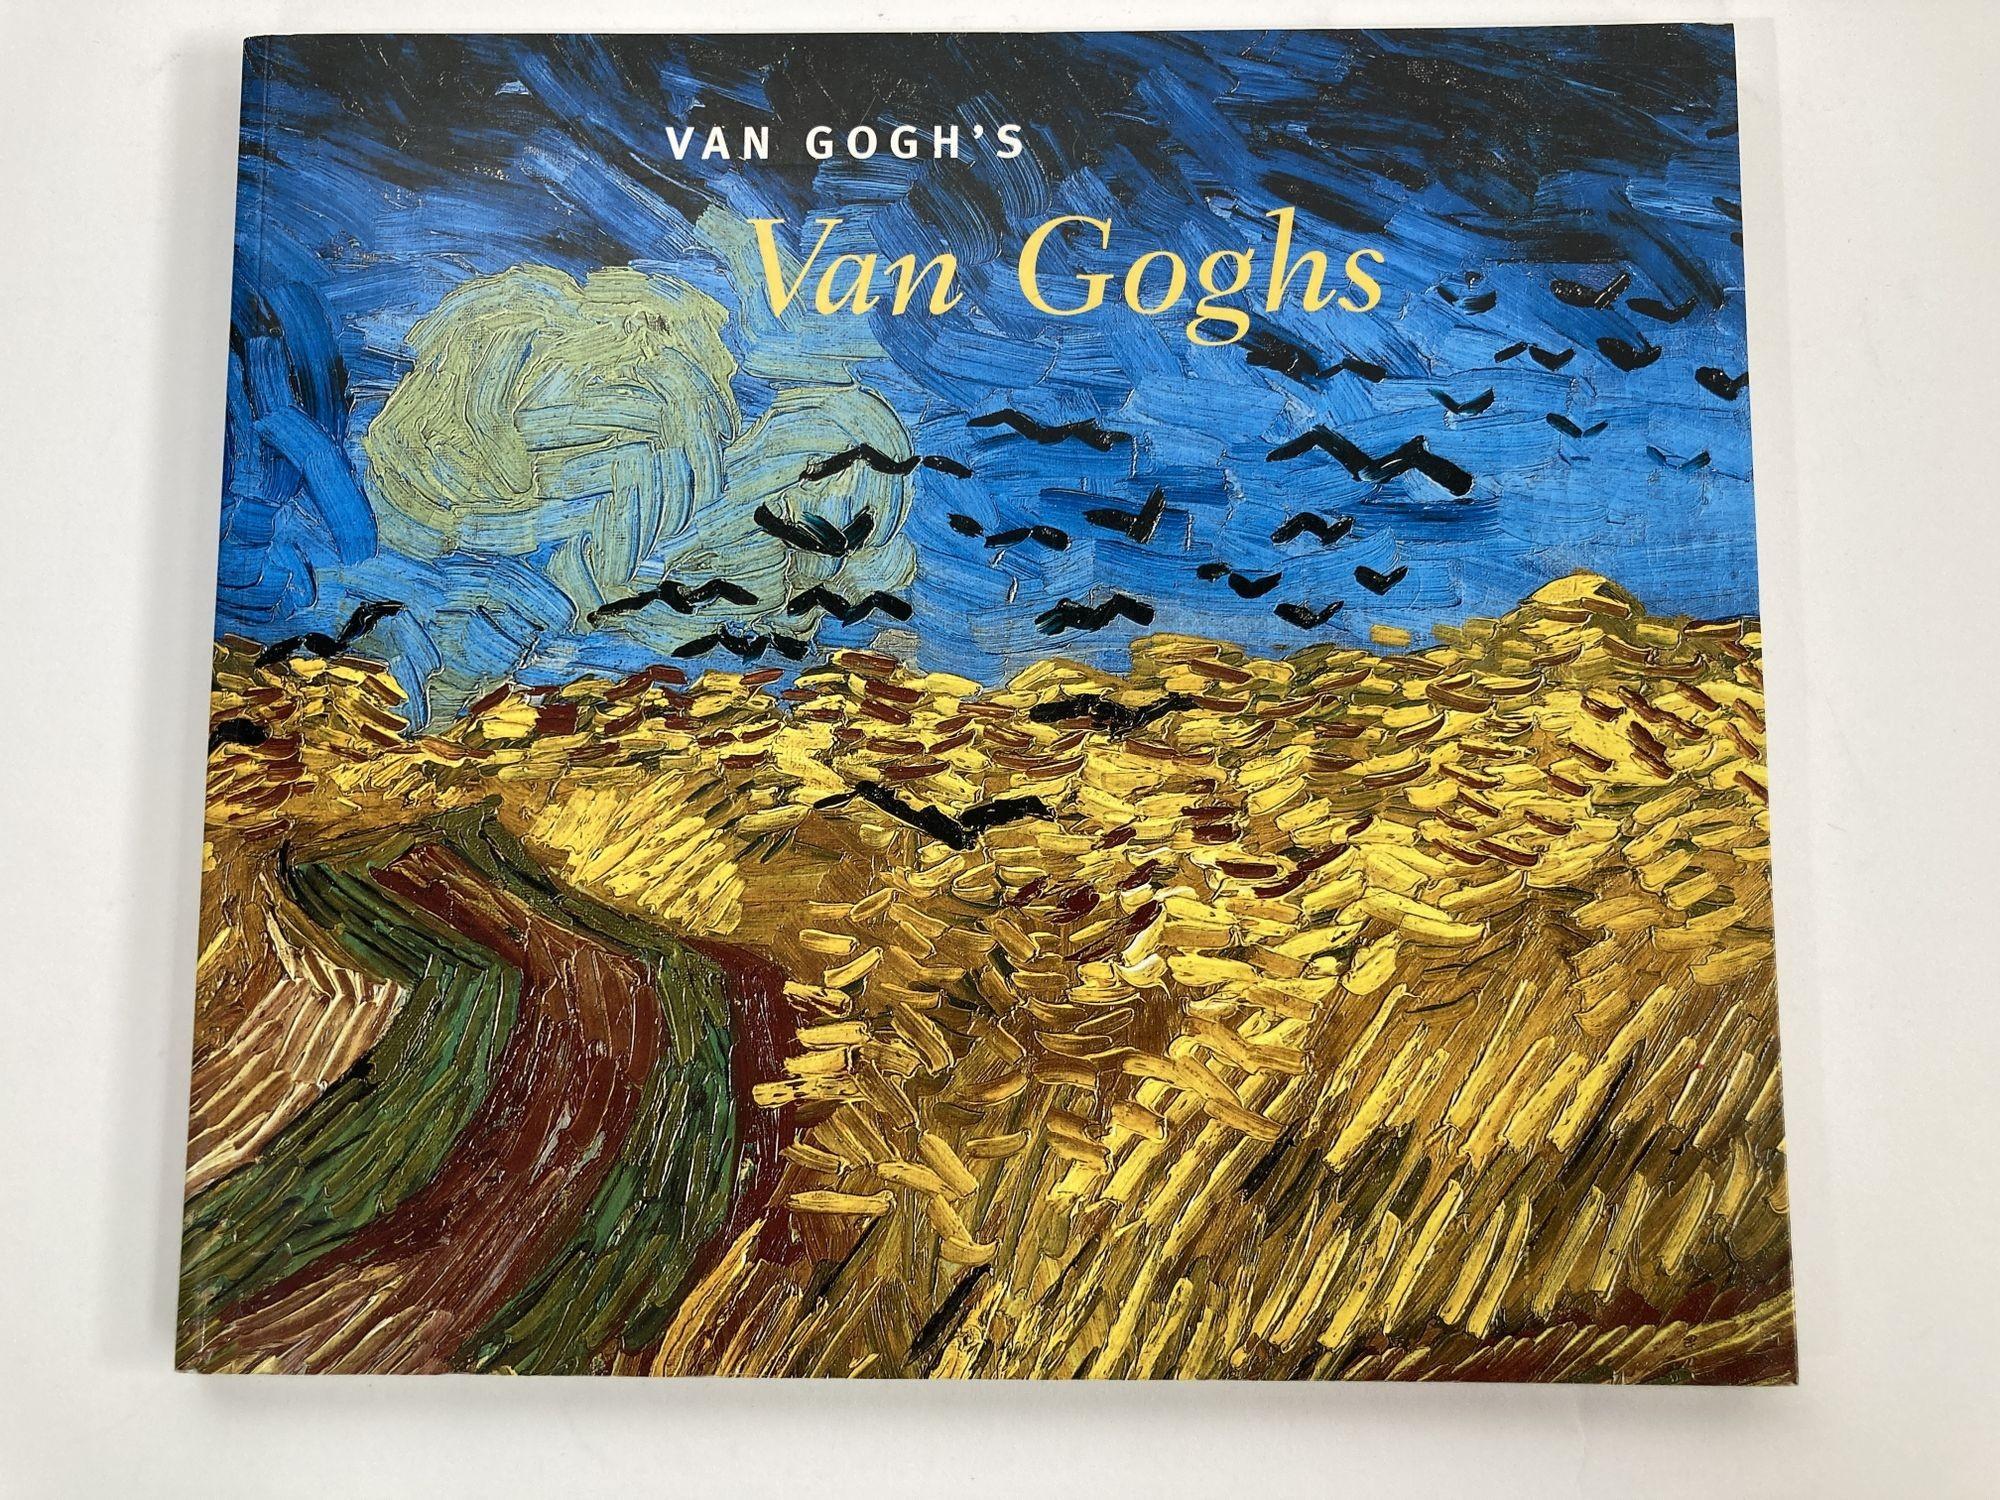 Van Gogh's Van Goghs: Masterpieces from the Van Gogh Museum, Amsterdam
by Kendall, Richard, Gogh, Vincent Van, Leighton, John, Van Gogh Museum, Amsterdam, National Gallery of Art (U. S.), Los Angeles County Museum of Art,
Title: Van Gogh's Van